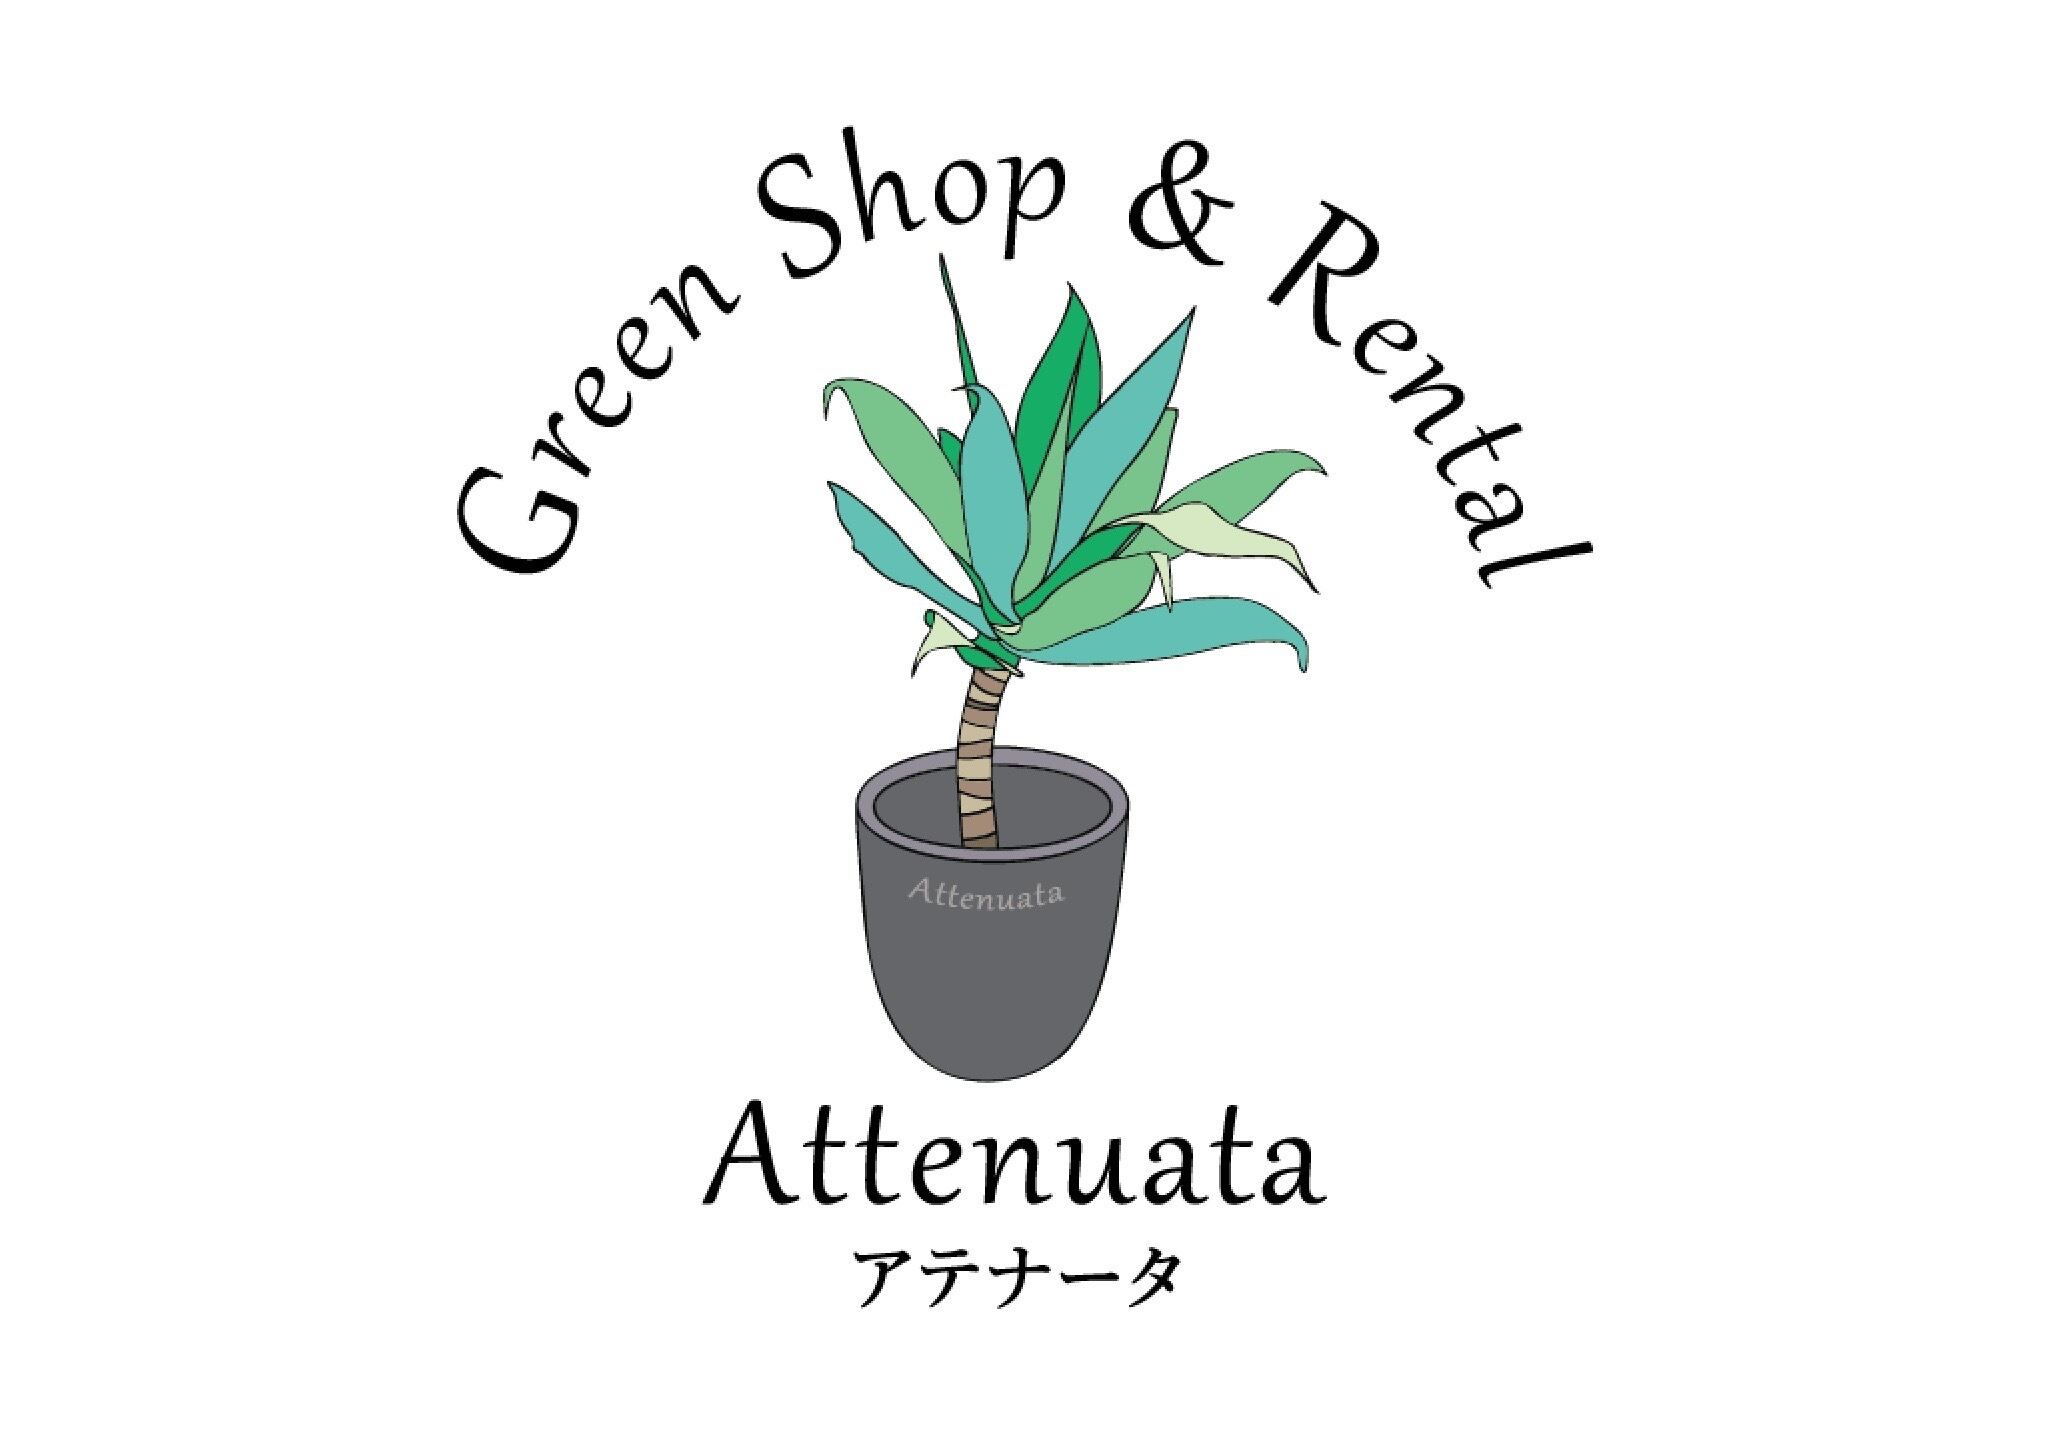 greenshop.attenuata